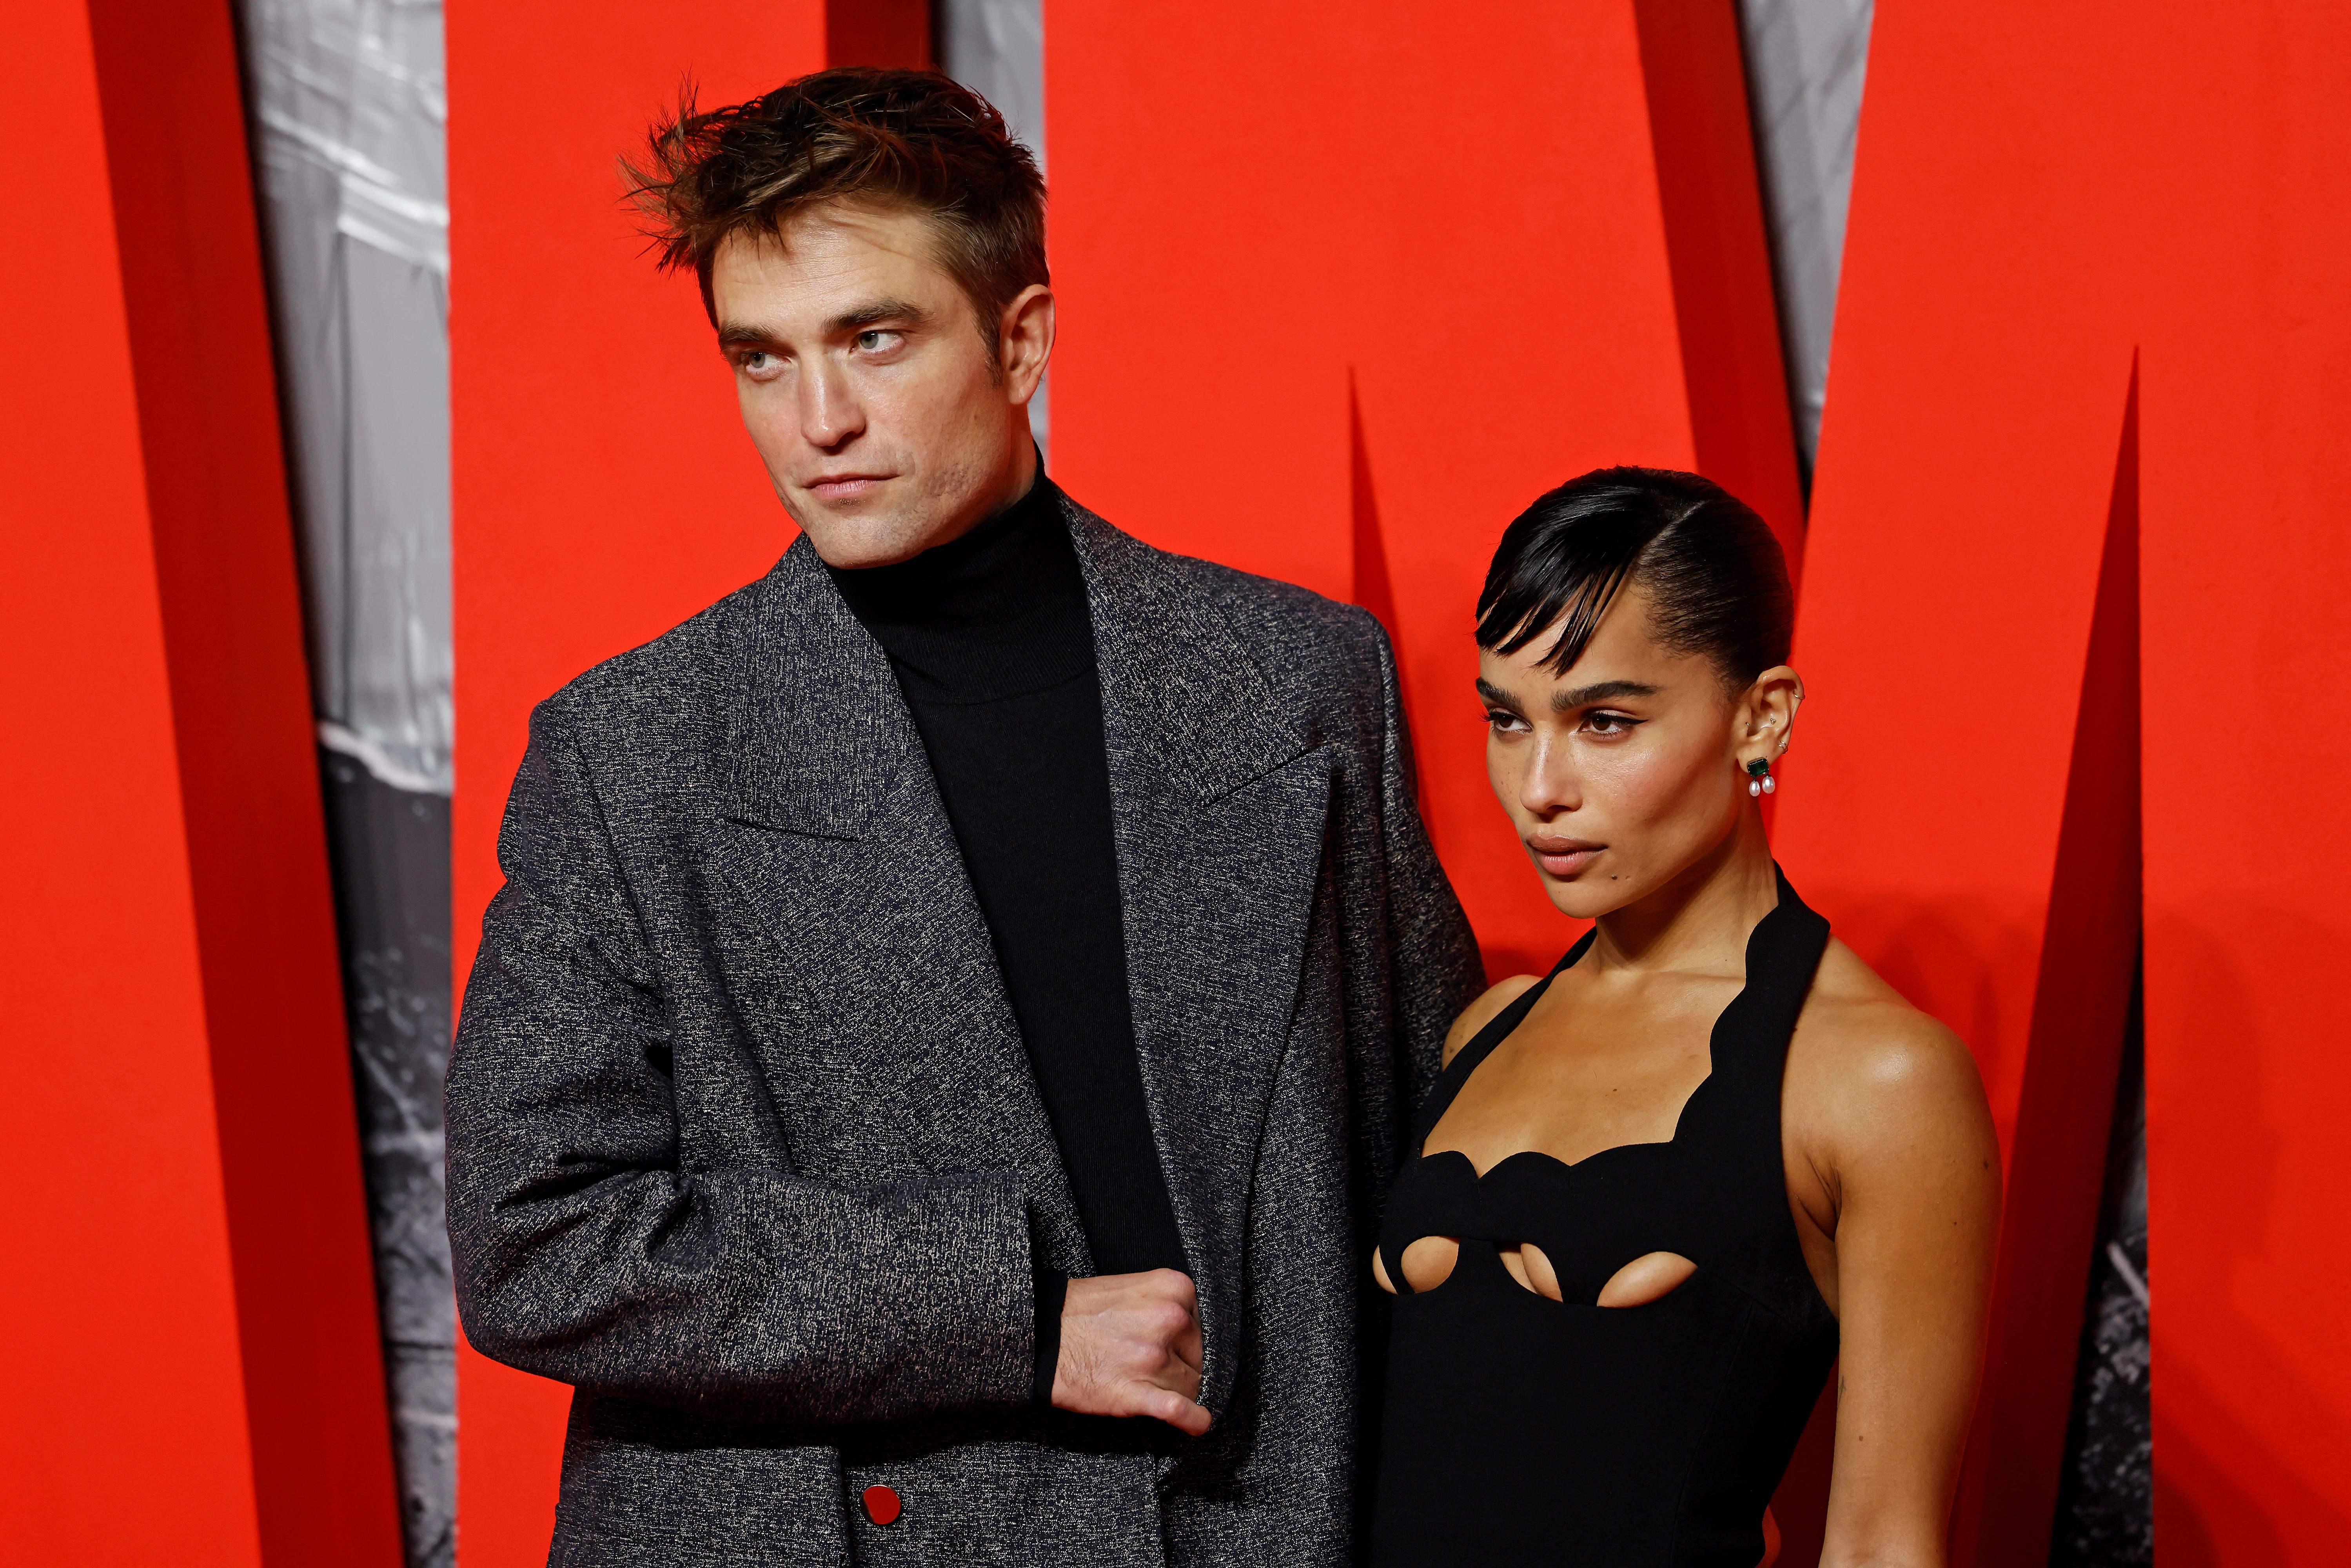 Robert Pattinson and Zoë Kravitz pose for photos together on the red carpet for 'The Batman' premiere. Pattinson wears a large gray coat over a black turtleneck. Kravitz wears a black dress.